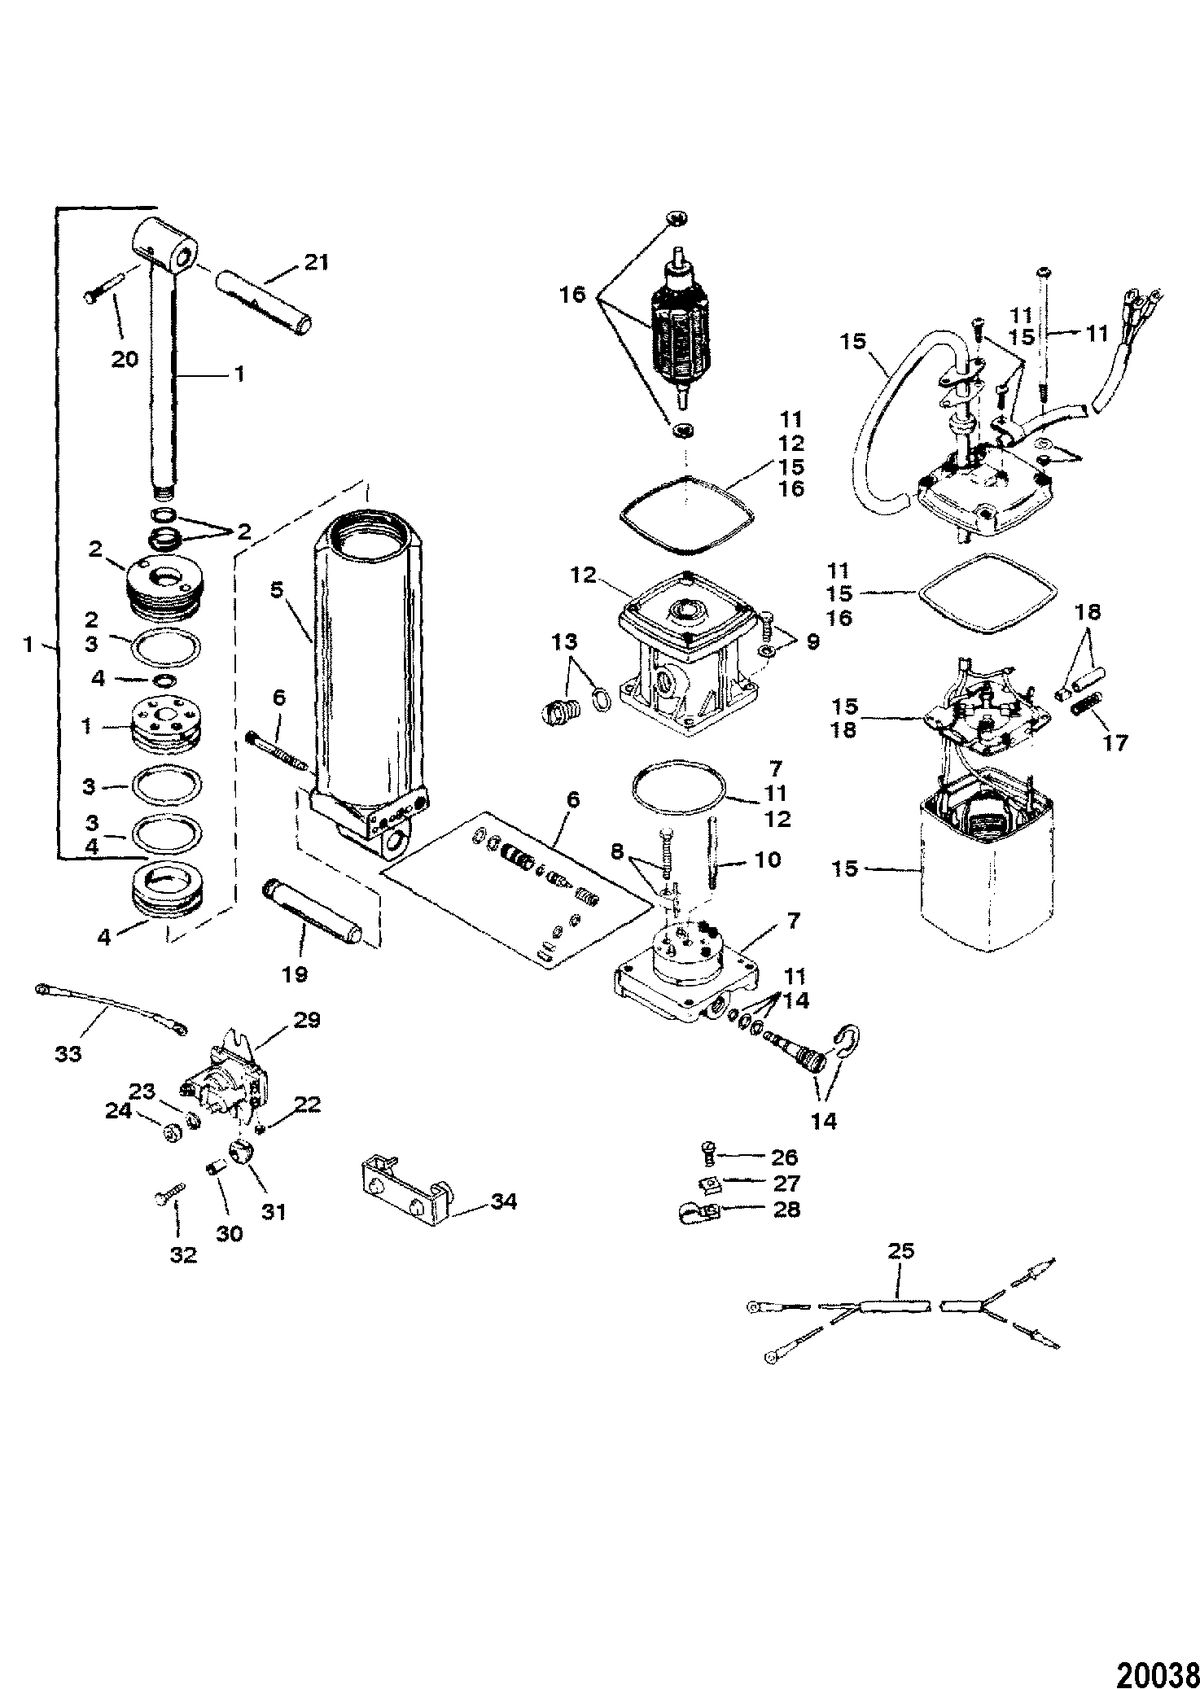 FORCE FORCE 120 H.P. Power Trim Components(Design I)